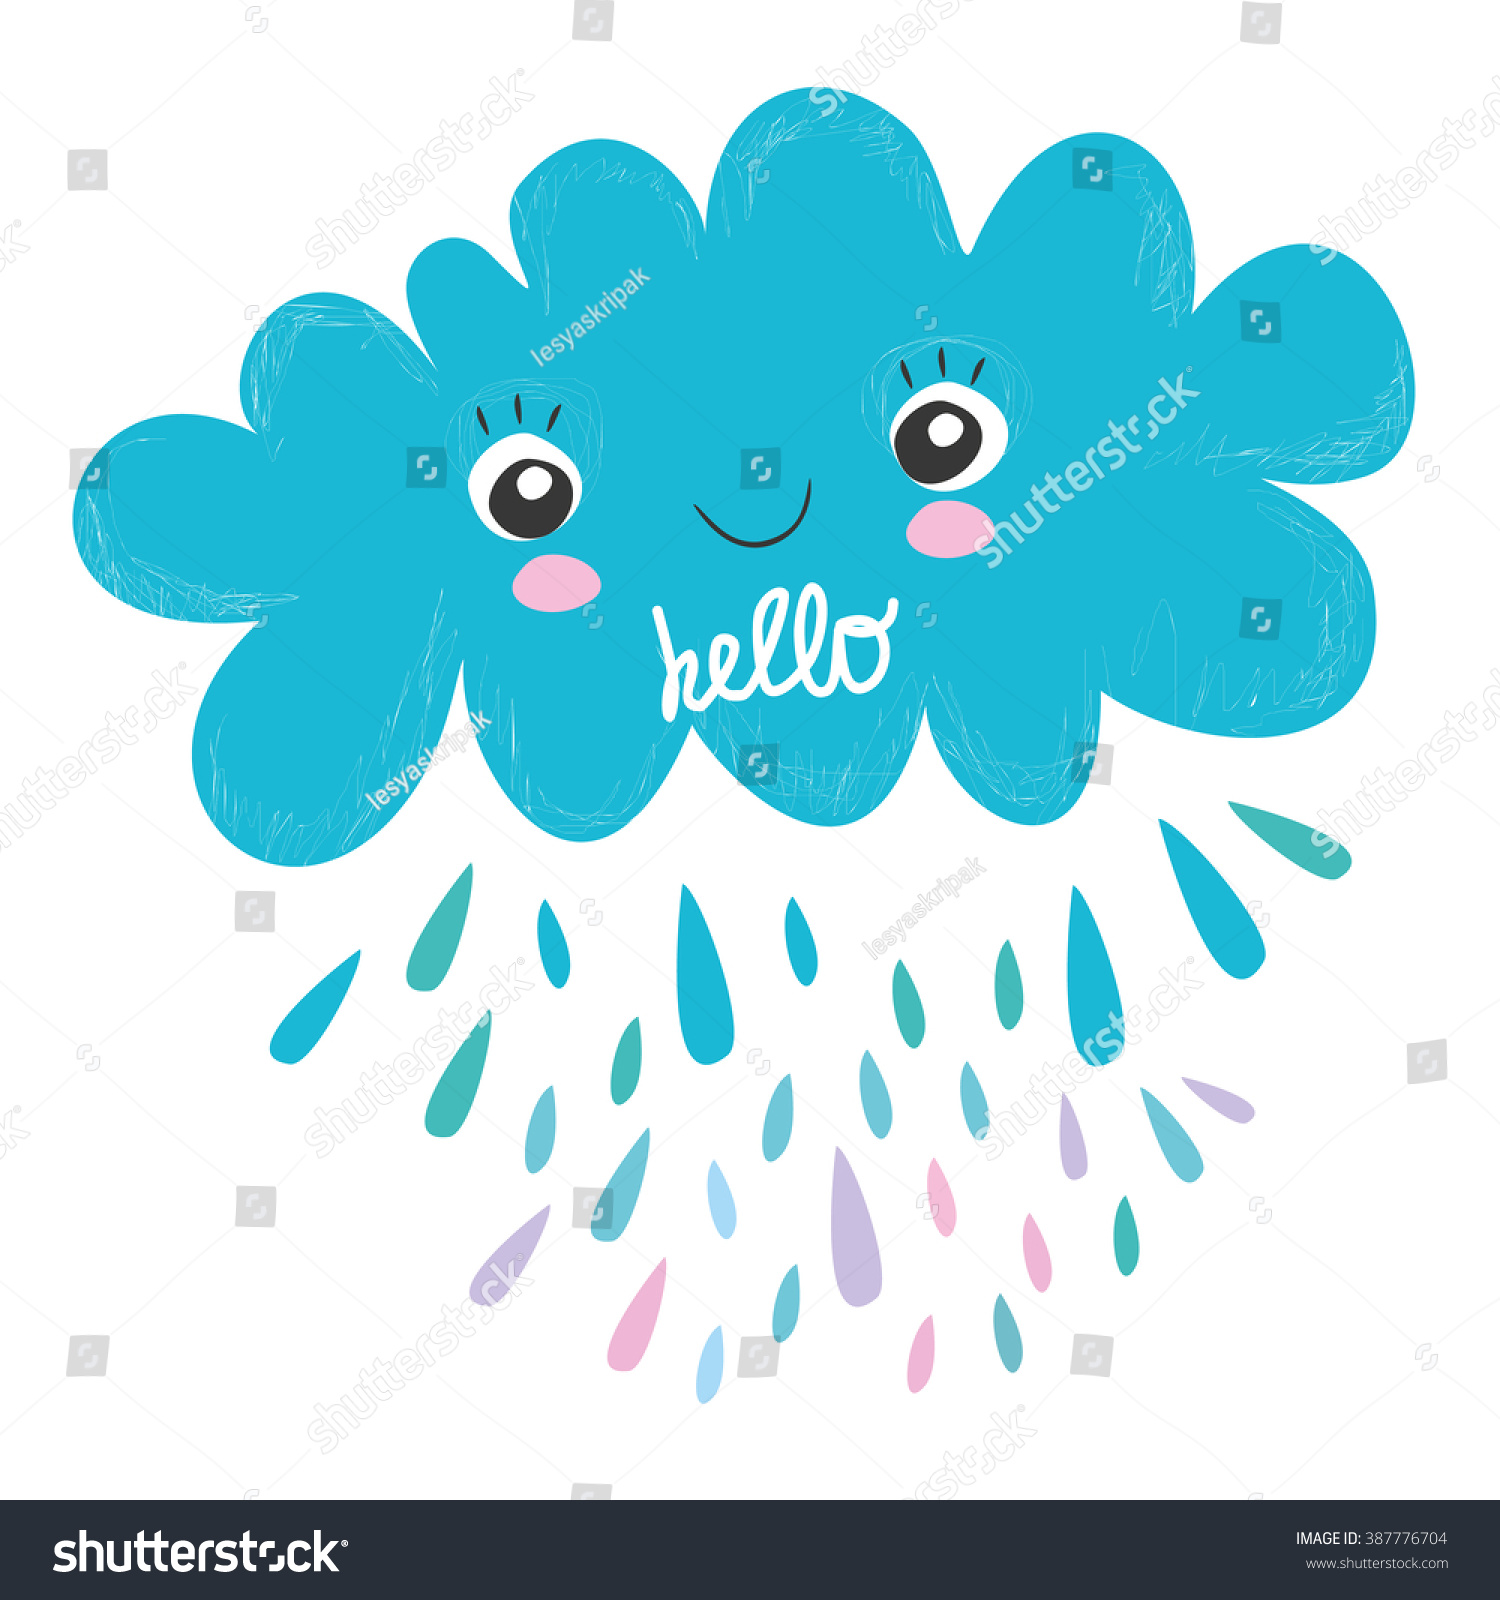 Cute Cloud Says Hello Vector Illustration Stock Vector 387776704 ...